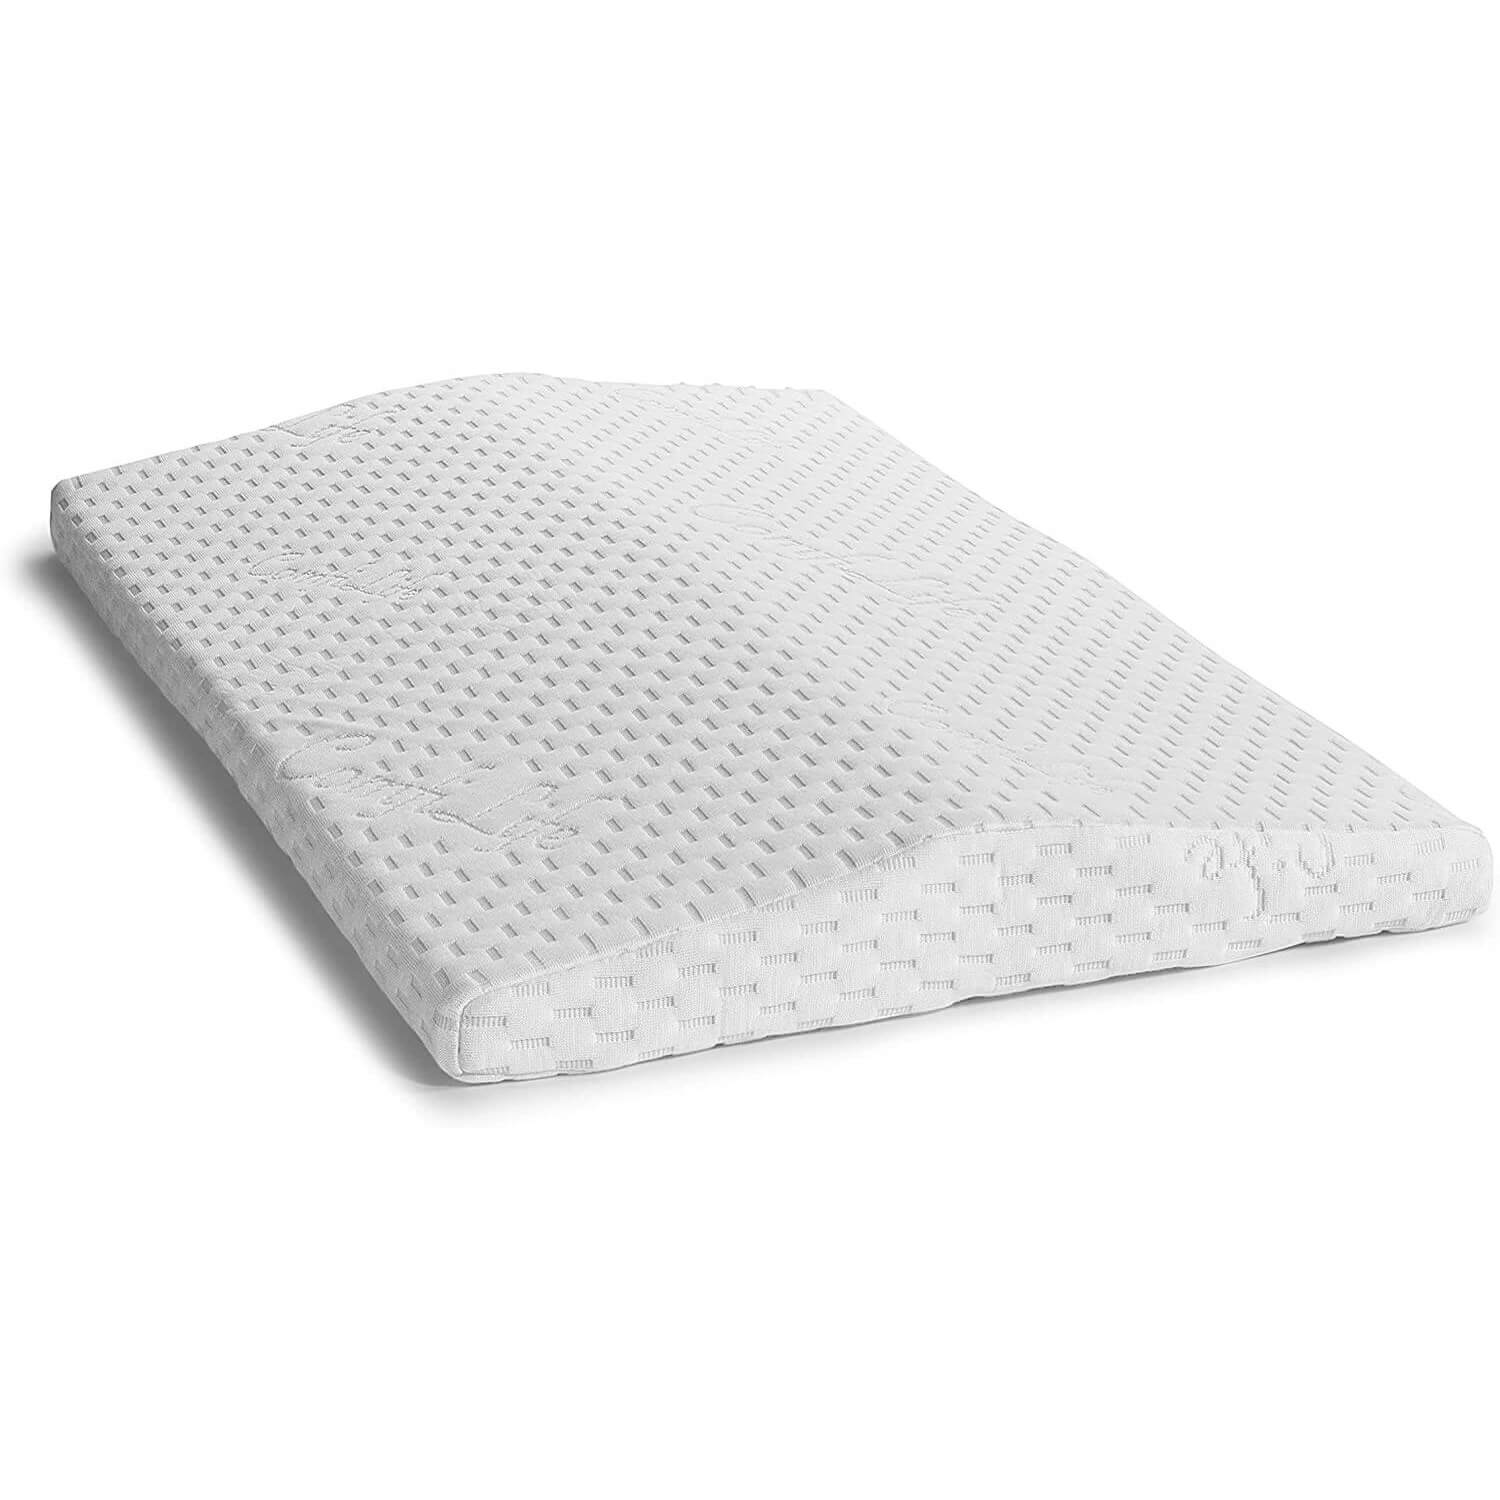 https://comfilife.com/wp-content/uploads/2021/01/ComfiLife-Lumbar-Support-Pillow-for-Sleeping-Memory-Foam-Pillow-for-Back-Pain-Relief_01_square.jpg